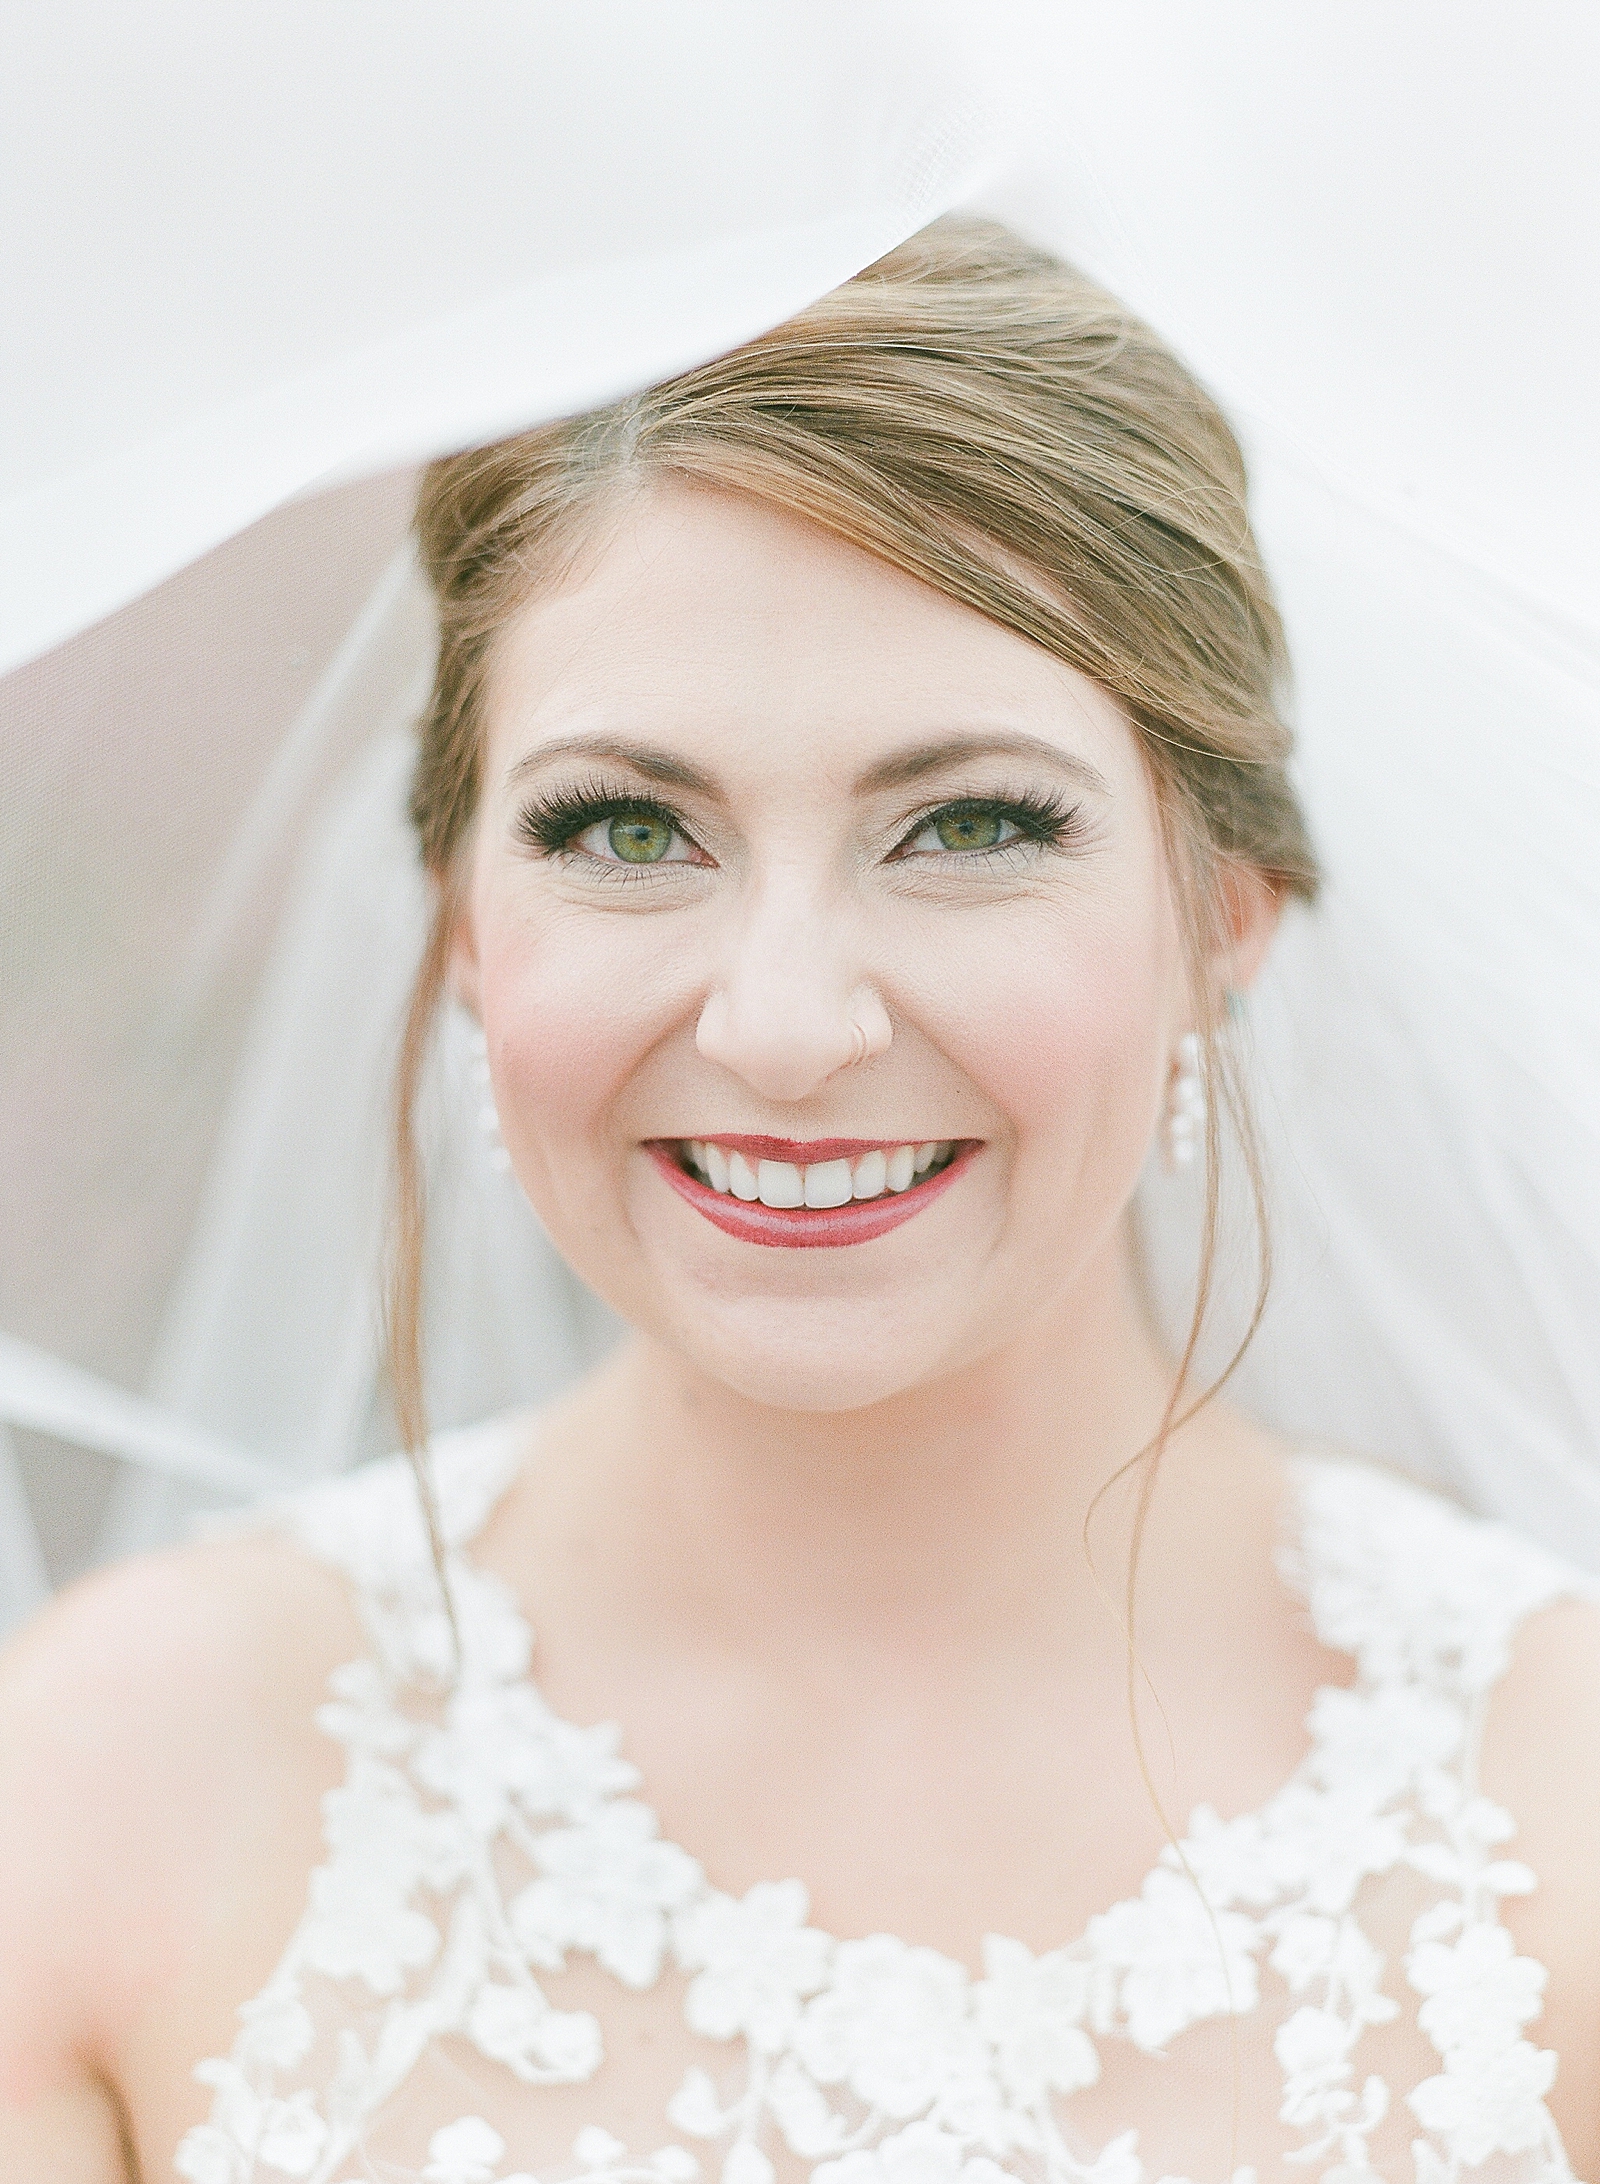 Asheville Bridal Editorial Bride Smiling at Camera Under Veil Photo